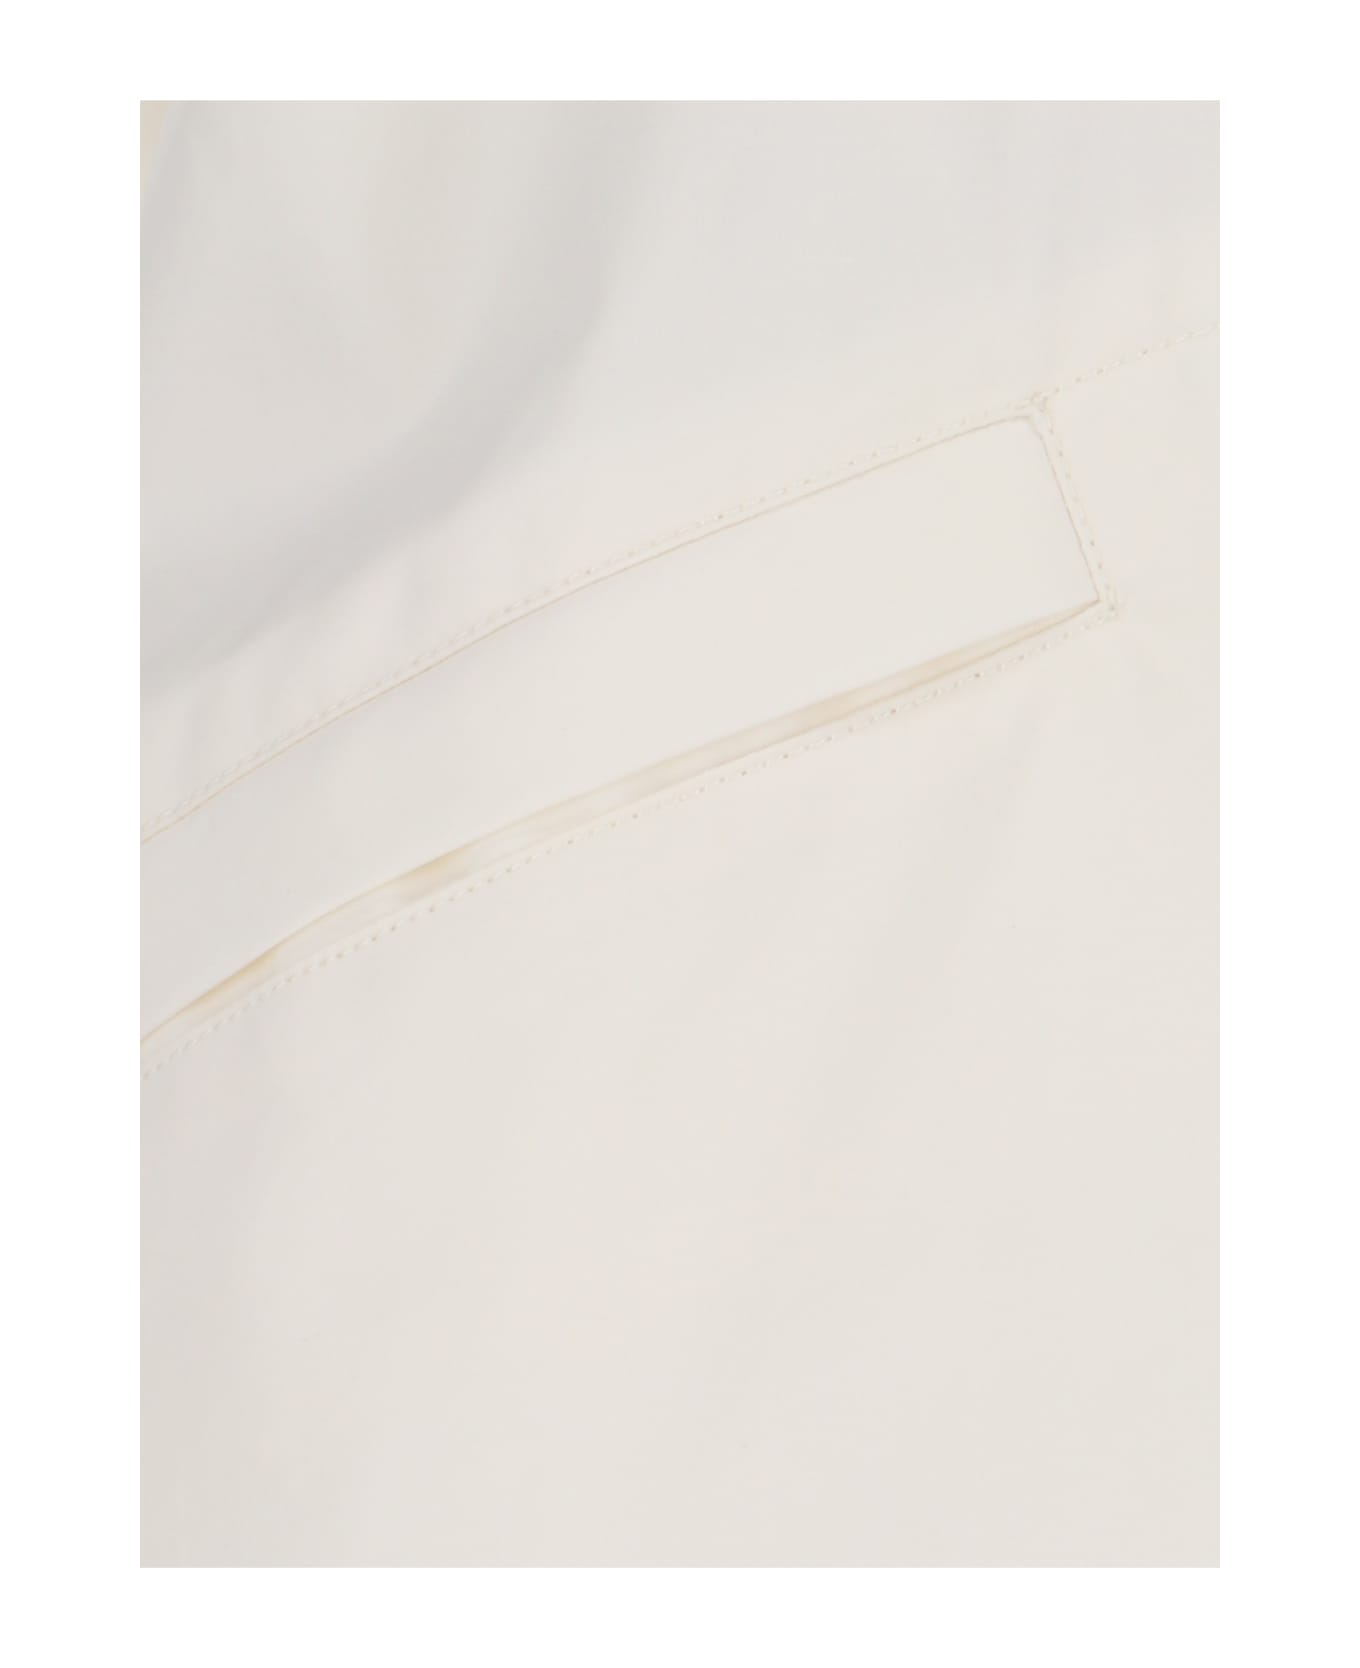 Jil Sander Retro Logo Jacket - Bianco